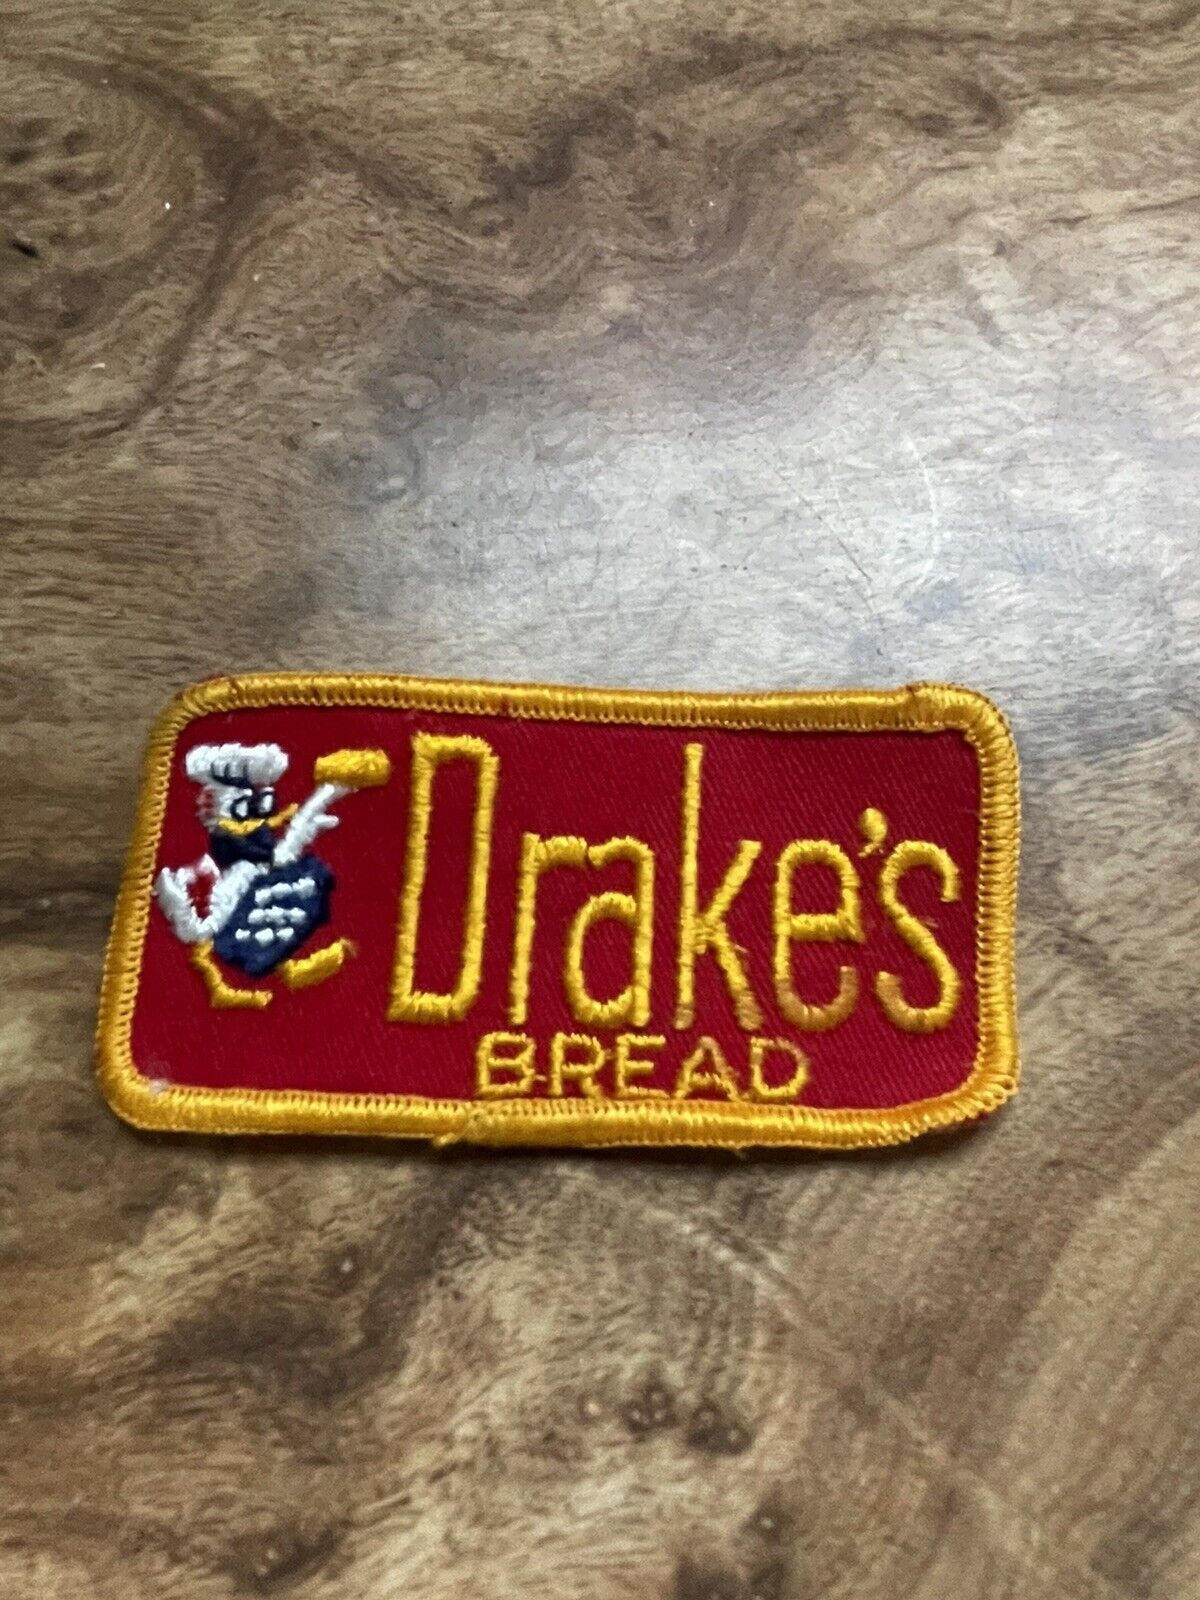 Drake’s Bakery Bread Cakes Patch Sew On Rare 3” Vtg Uniform 70s Logo